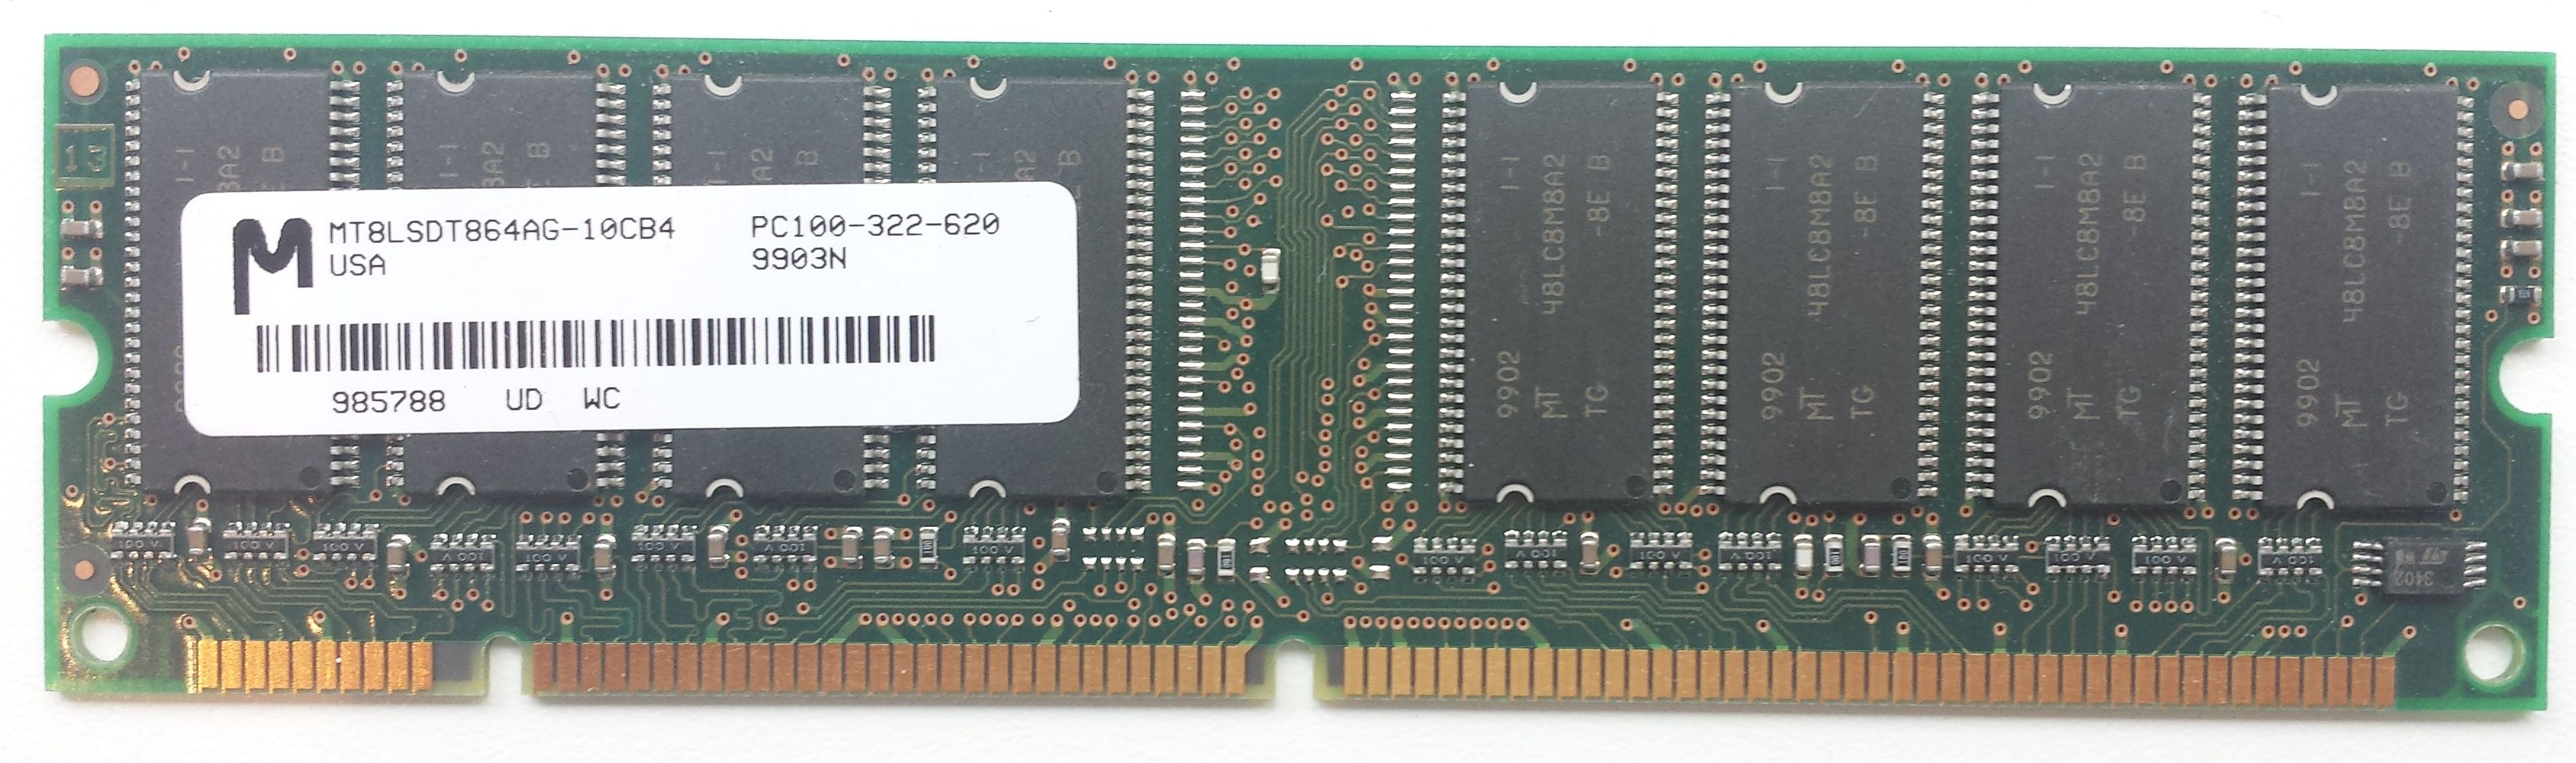 SDRAM 64MB 100Mhz / Micron MT8LSDT864AG-10CB4